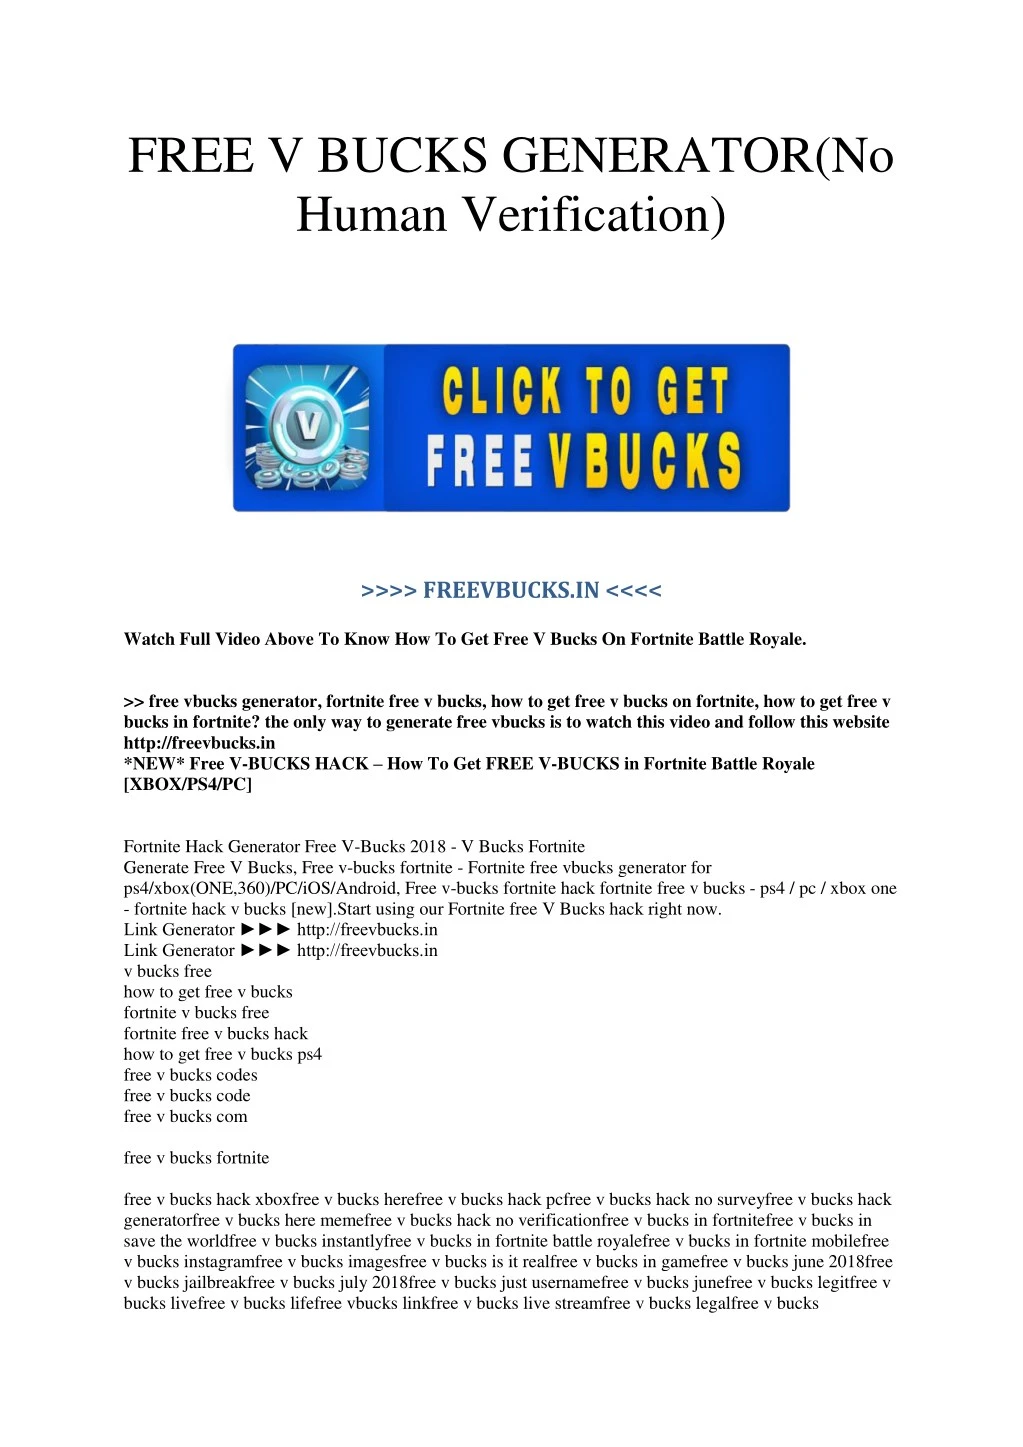 Fortnite hack v bucks ps4 no human verification | Fortnite ... - 720 x 1018 jpeg 124kB